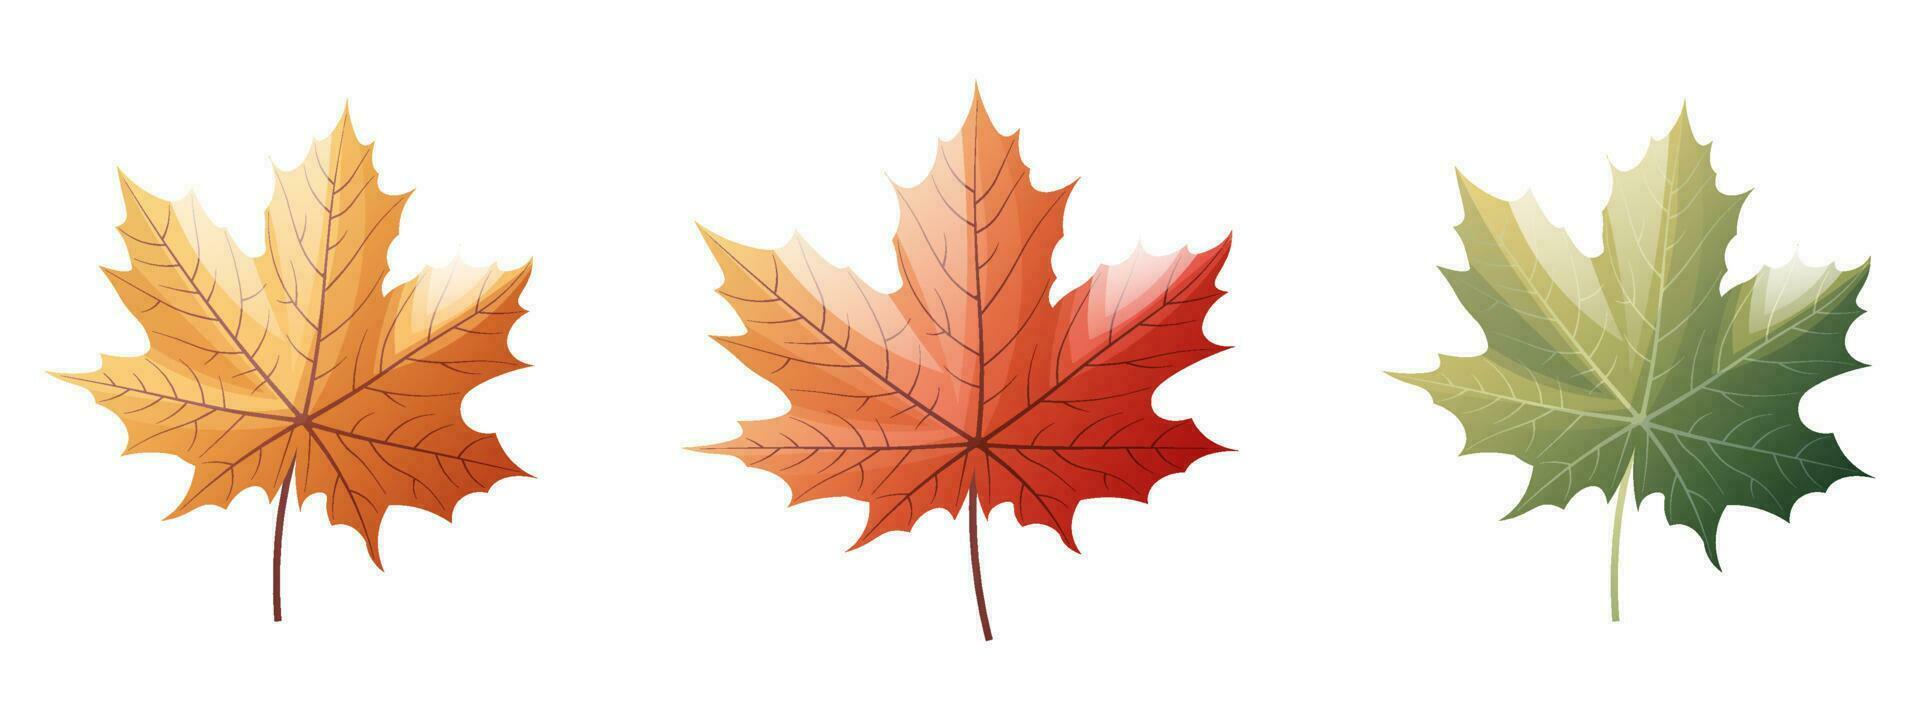 Maple leaves on a white background. Set of multicolored autumn leaves. Cartoon vector illustration. Hello autumn, seasonal theme.